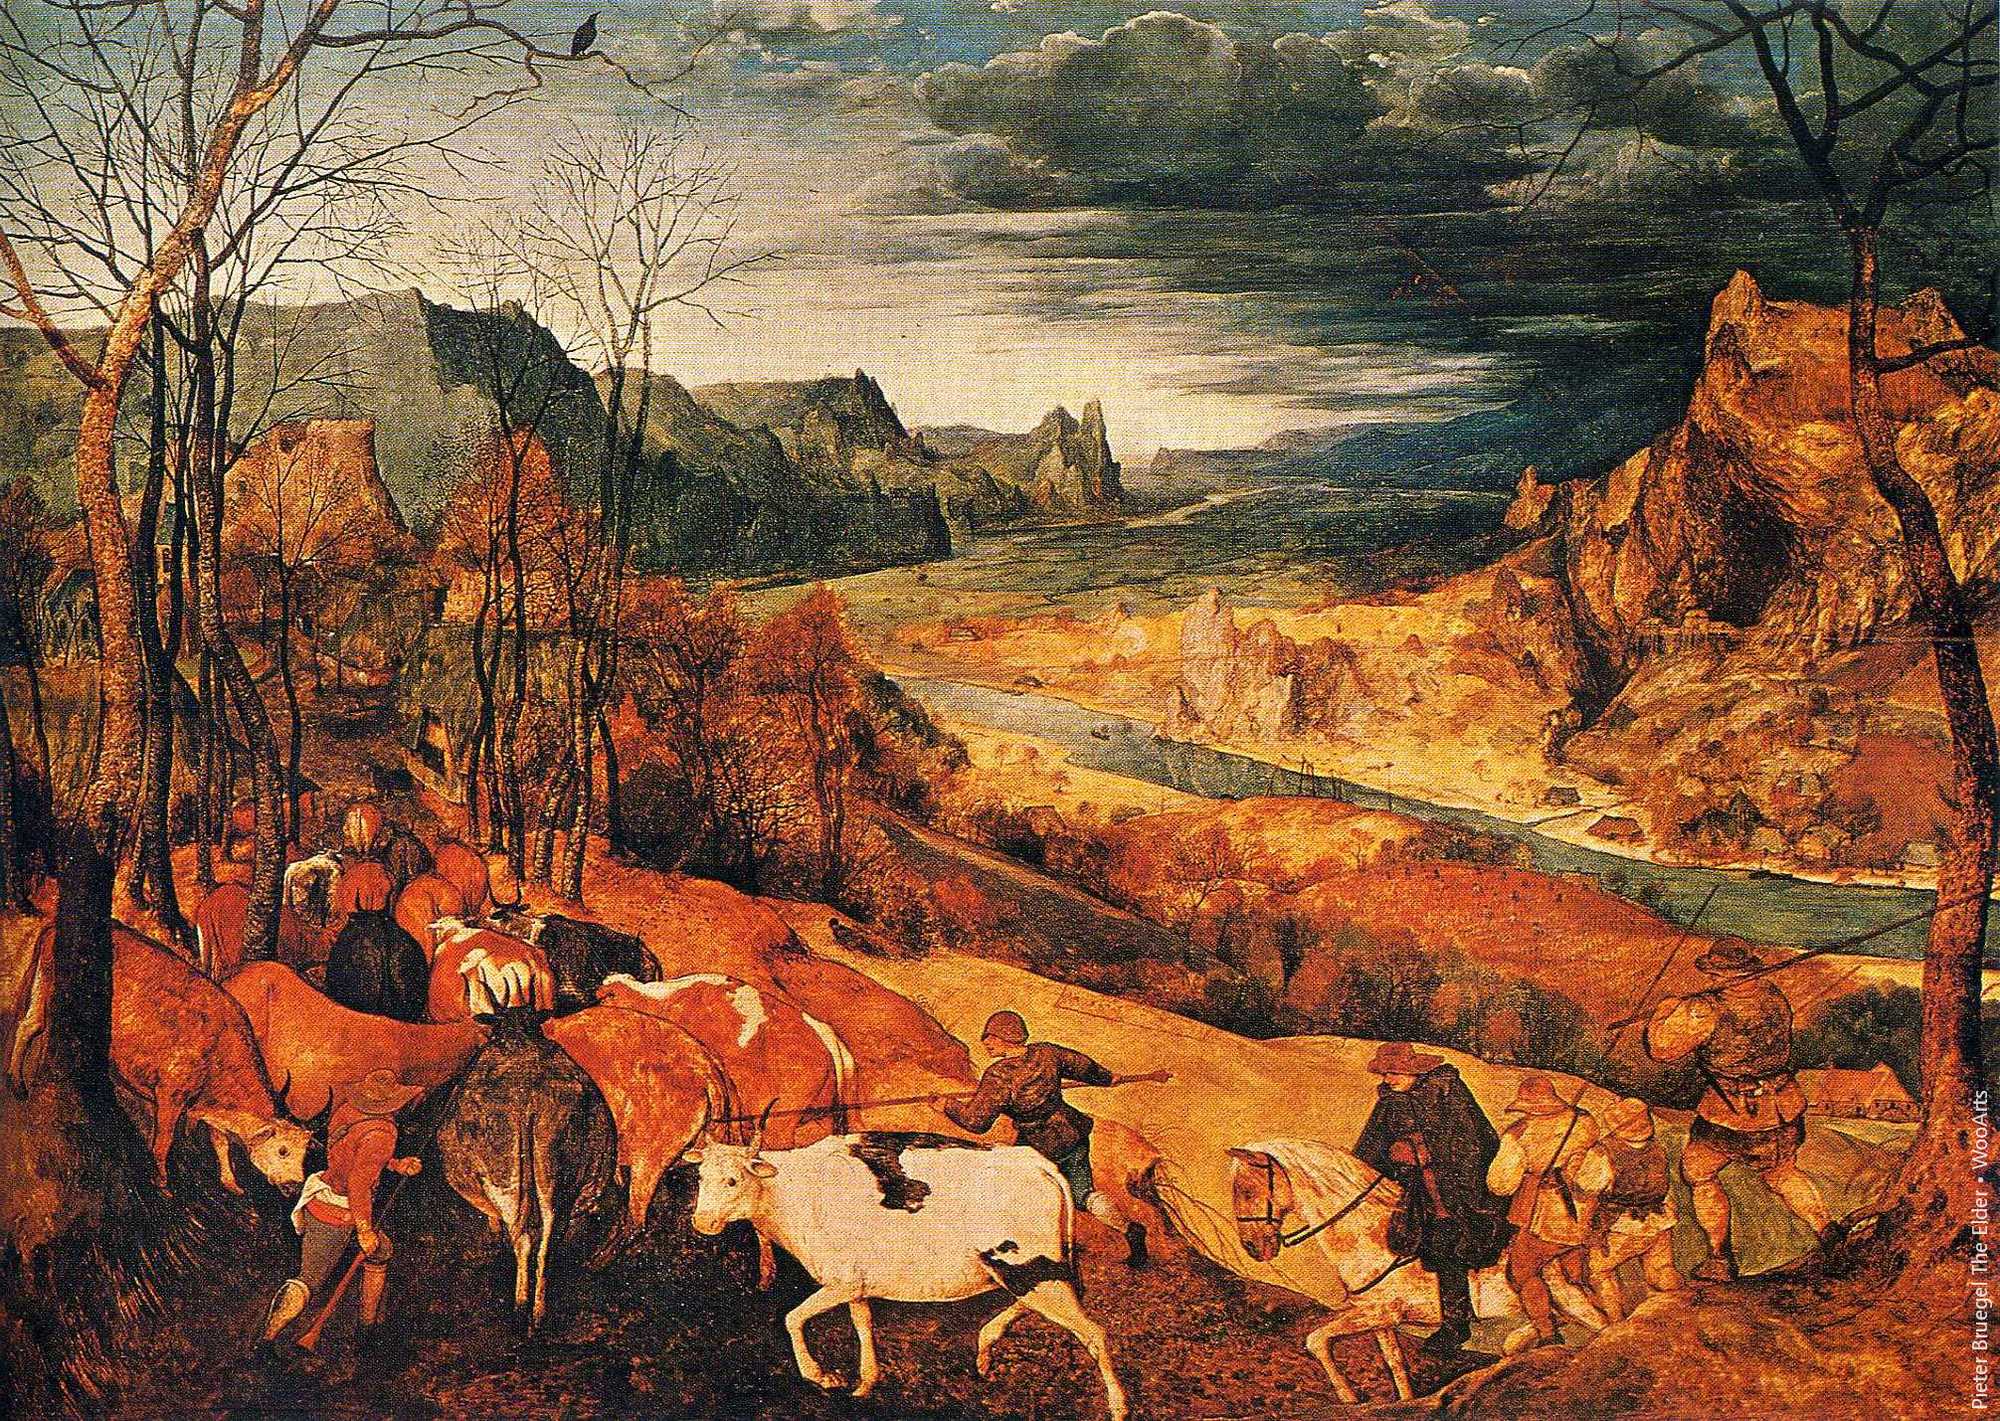 Painting by Pieter Bruegel The Elder